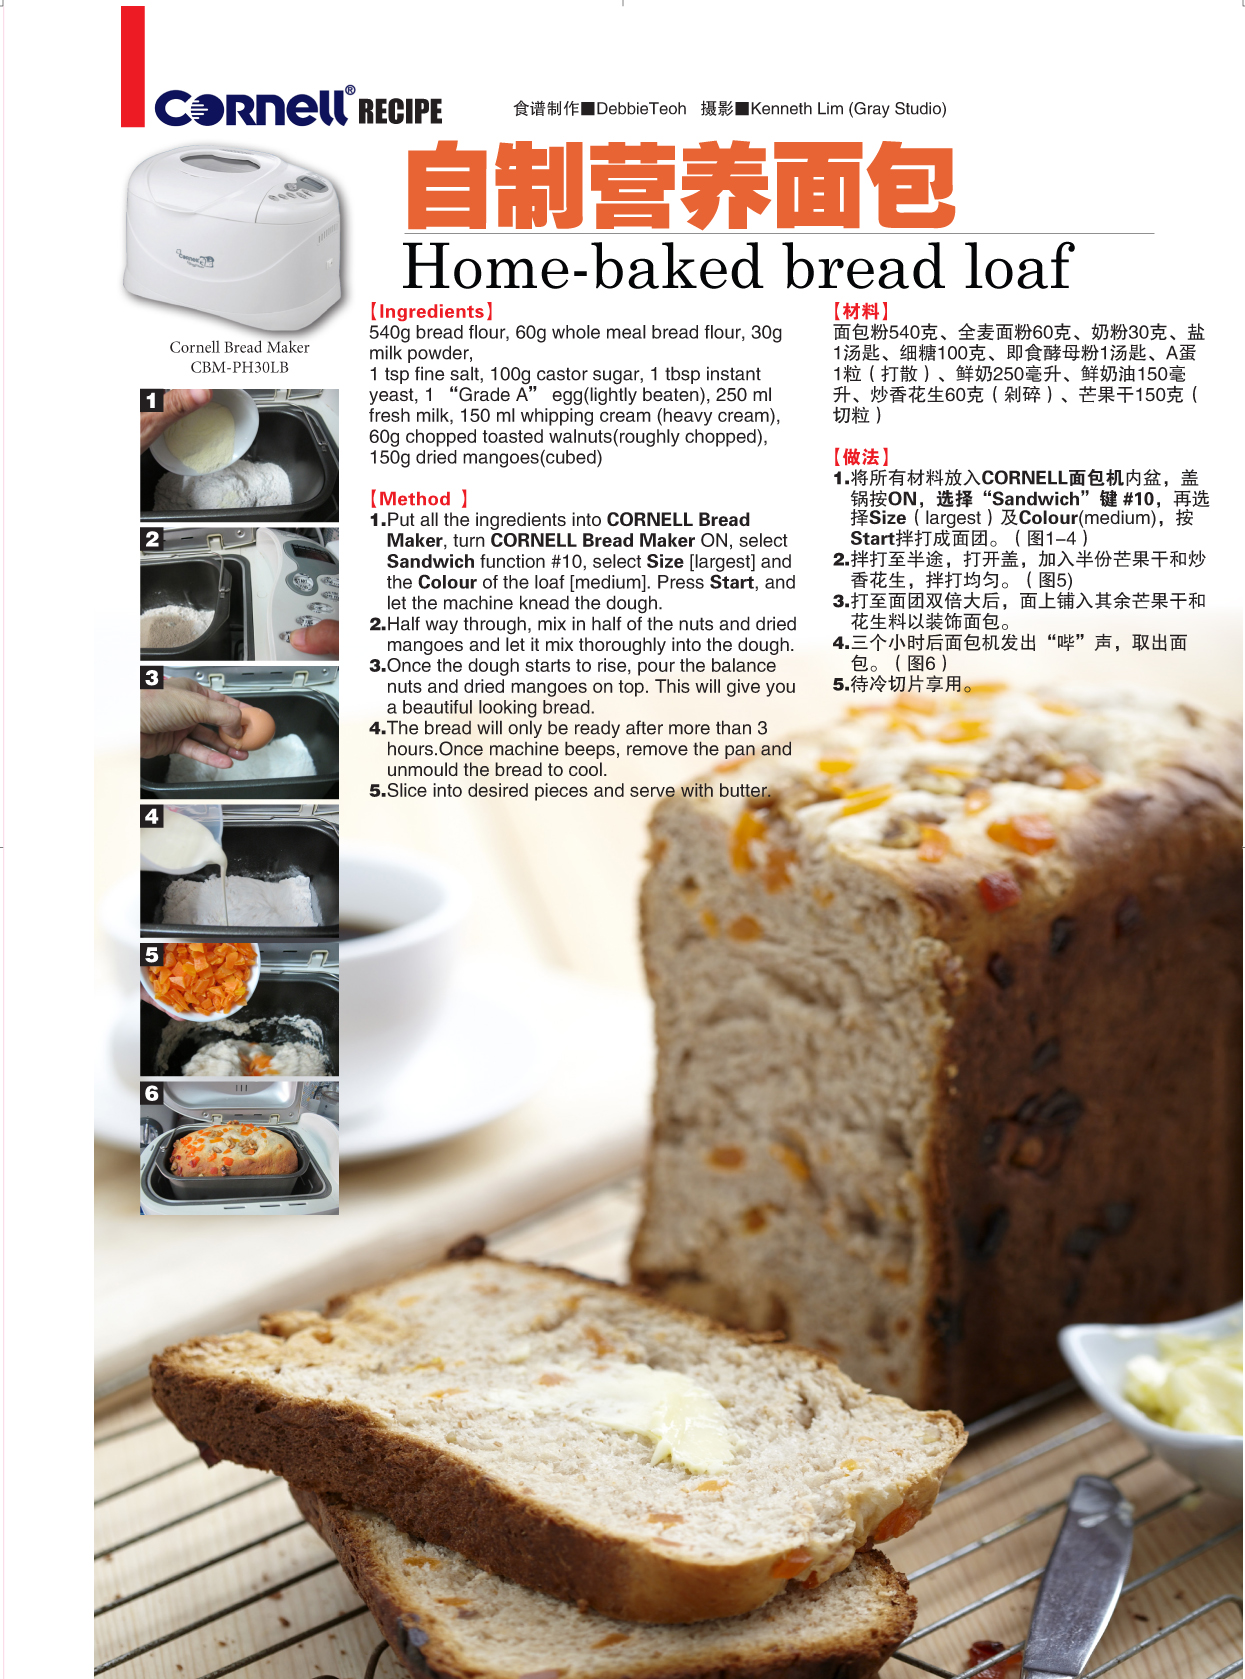 Home-baked Bread Loaf